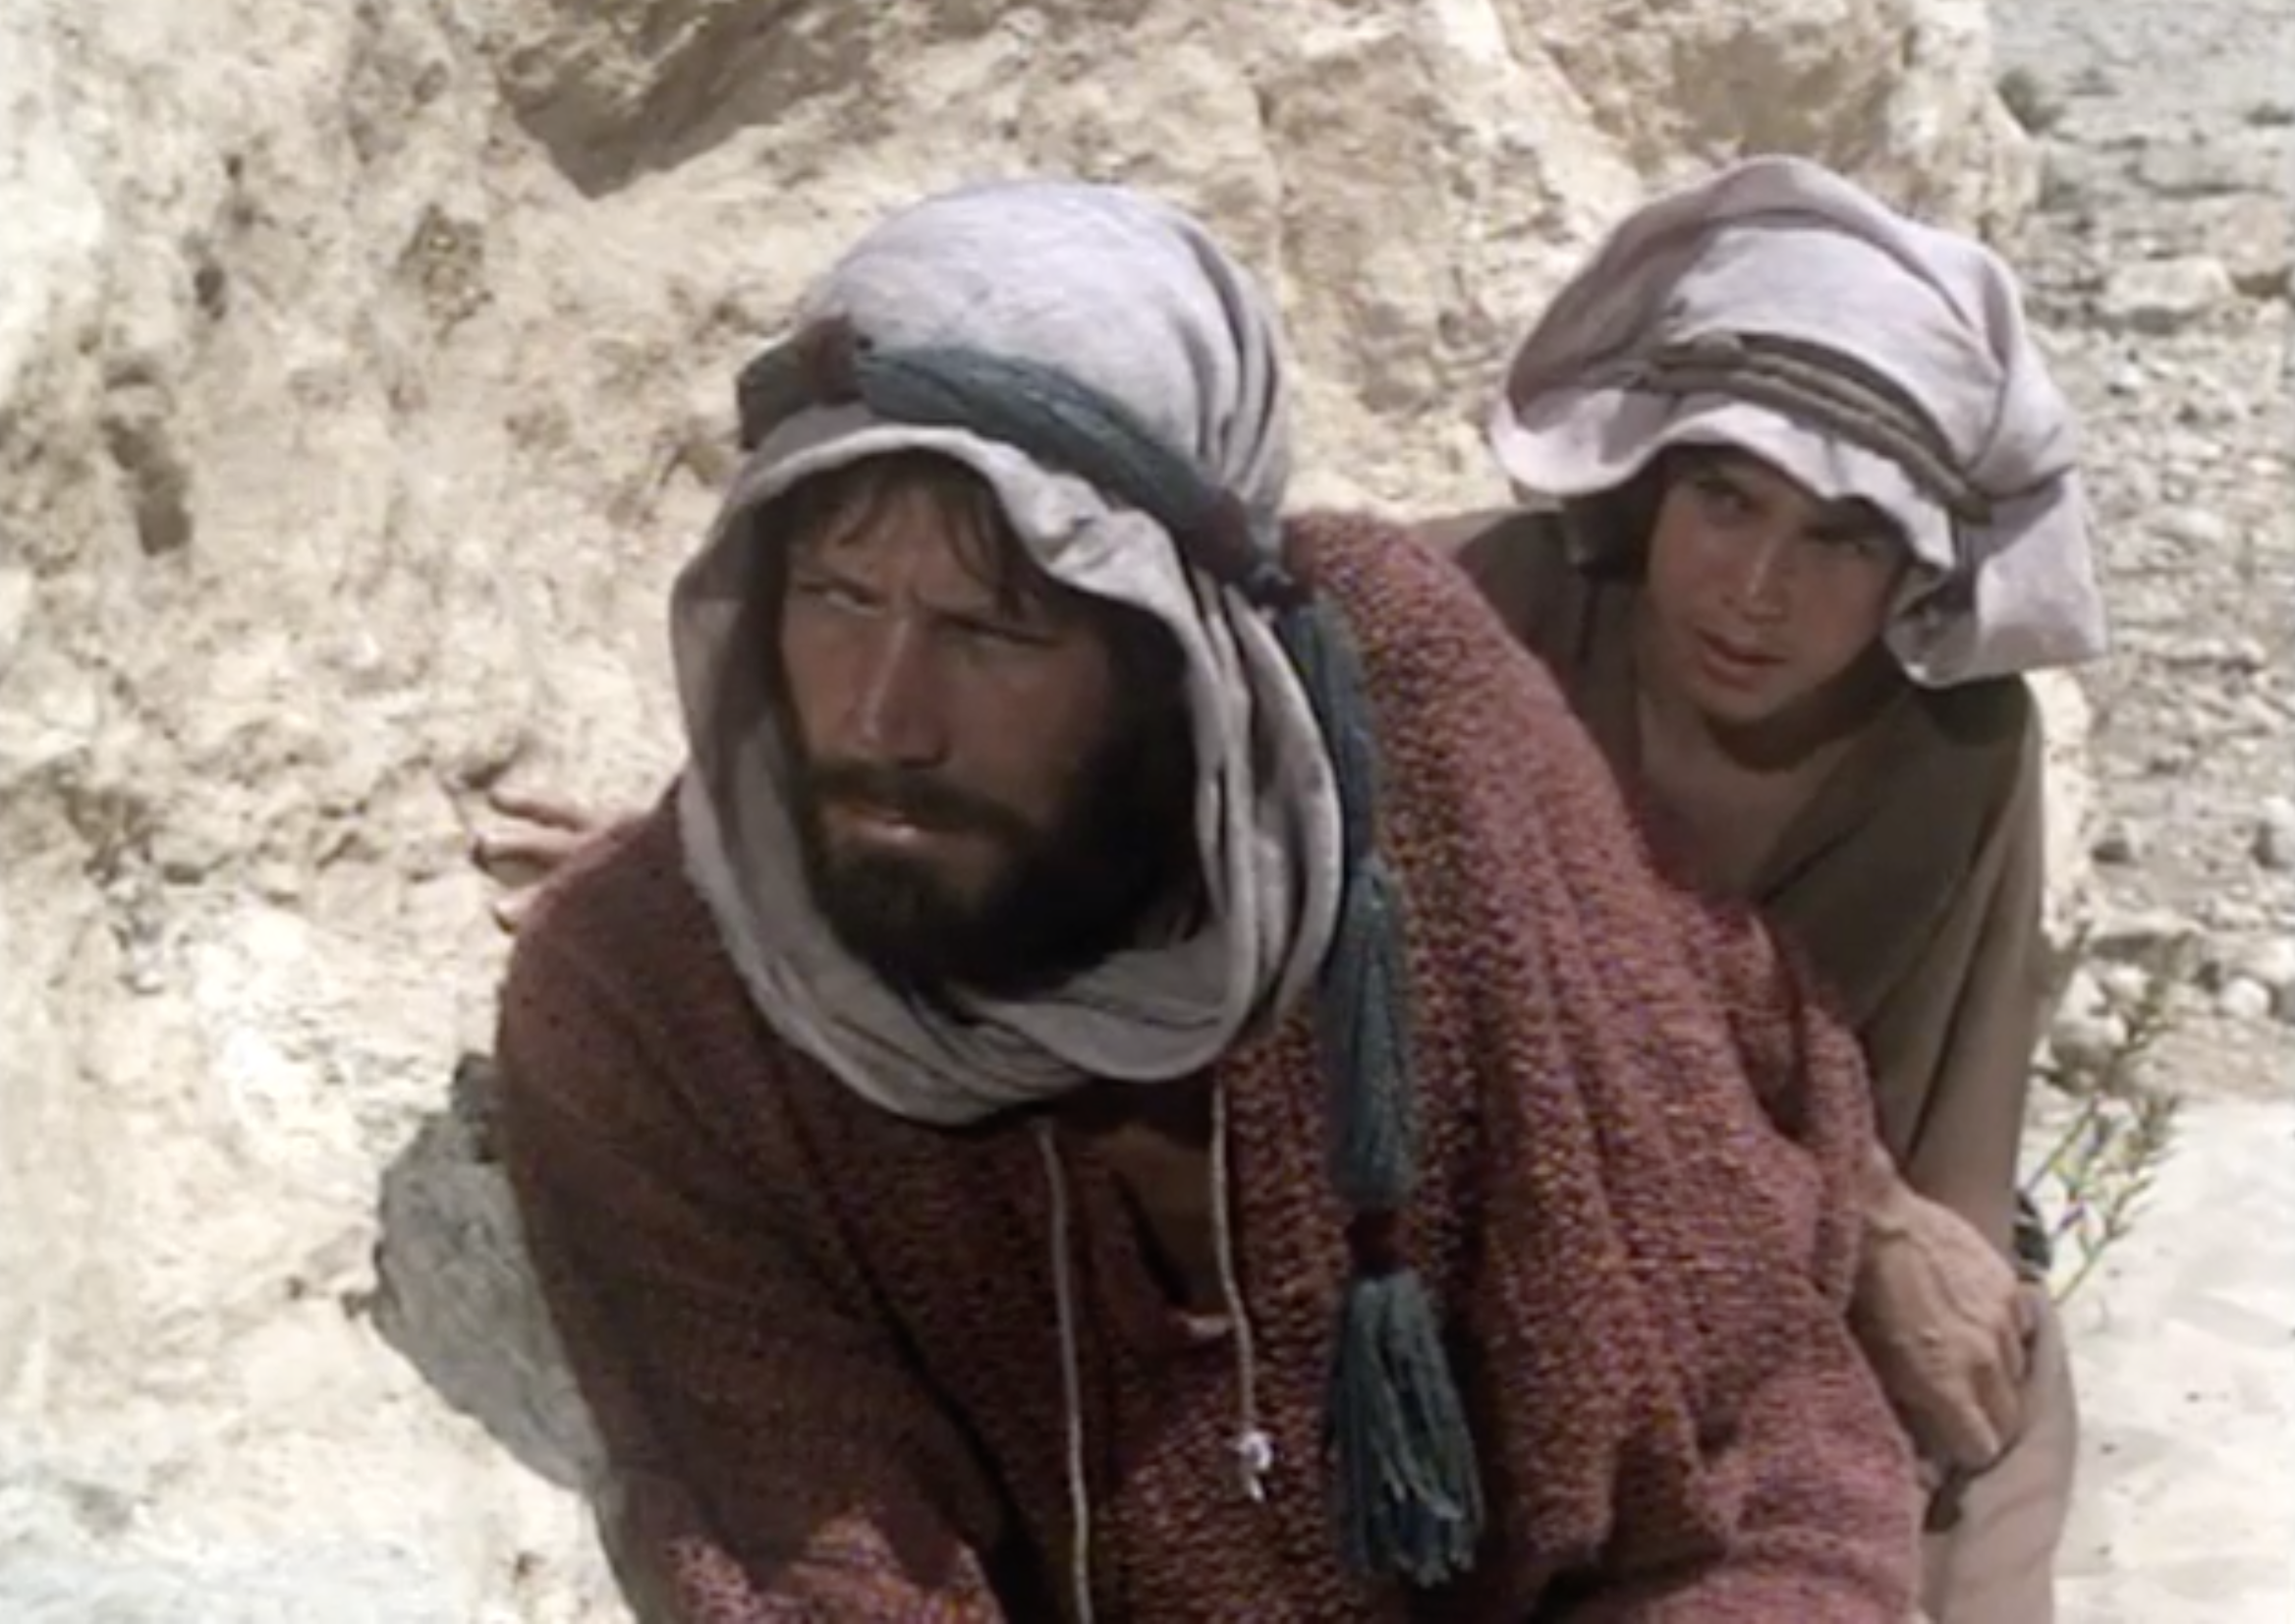 Elazar ben-Yair & son from the 1981 mini-series Masada